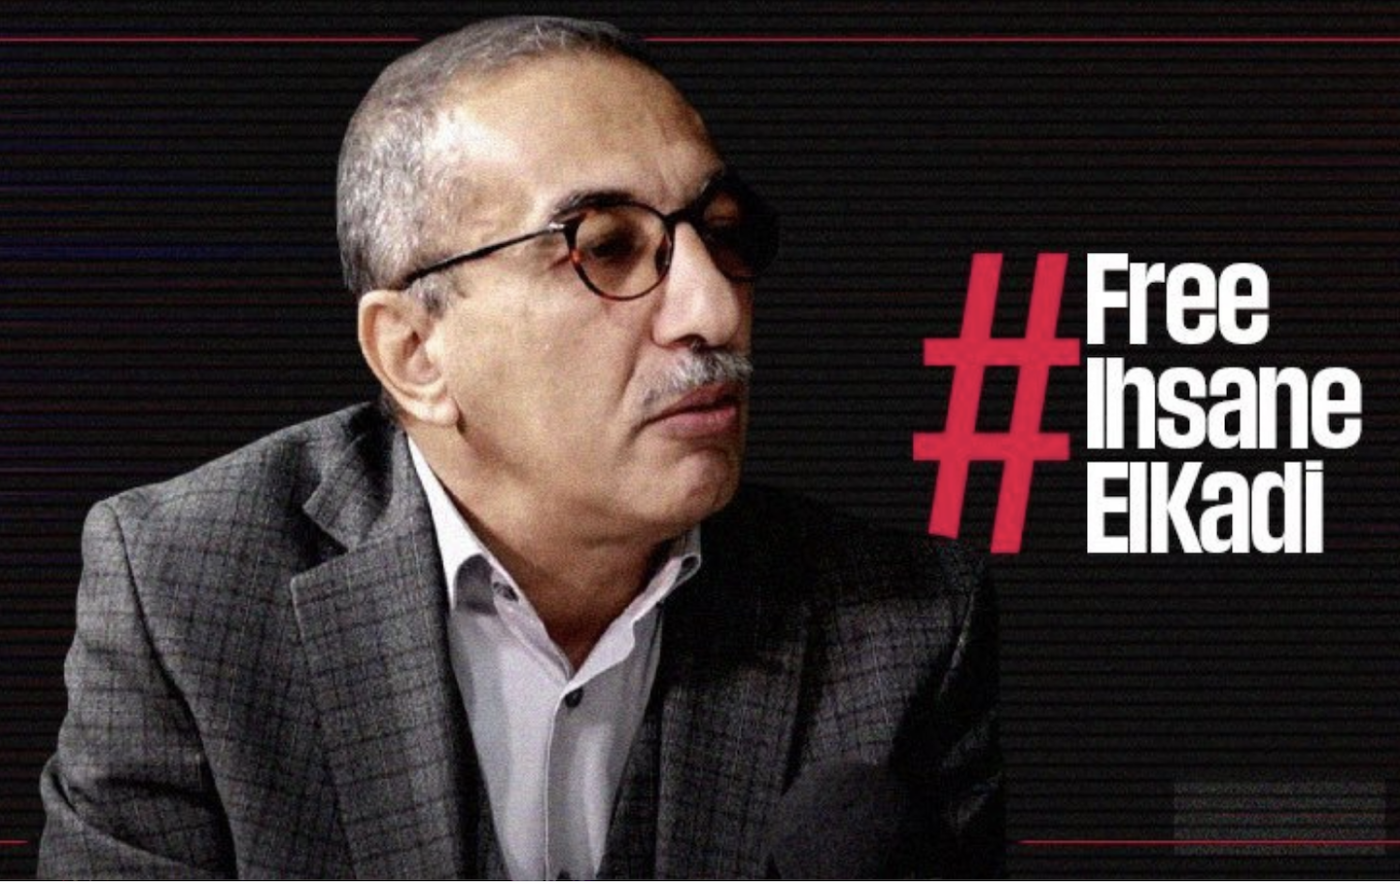 New York: CPJ calls for immediate release of Algerian journalist Ihsane el-Kadi